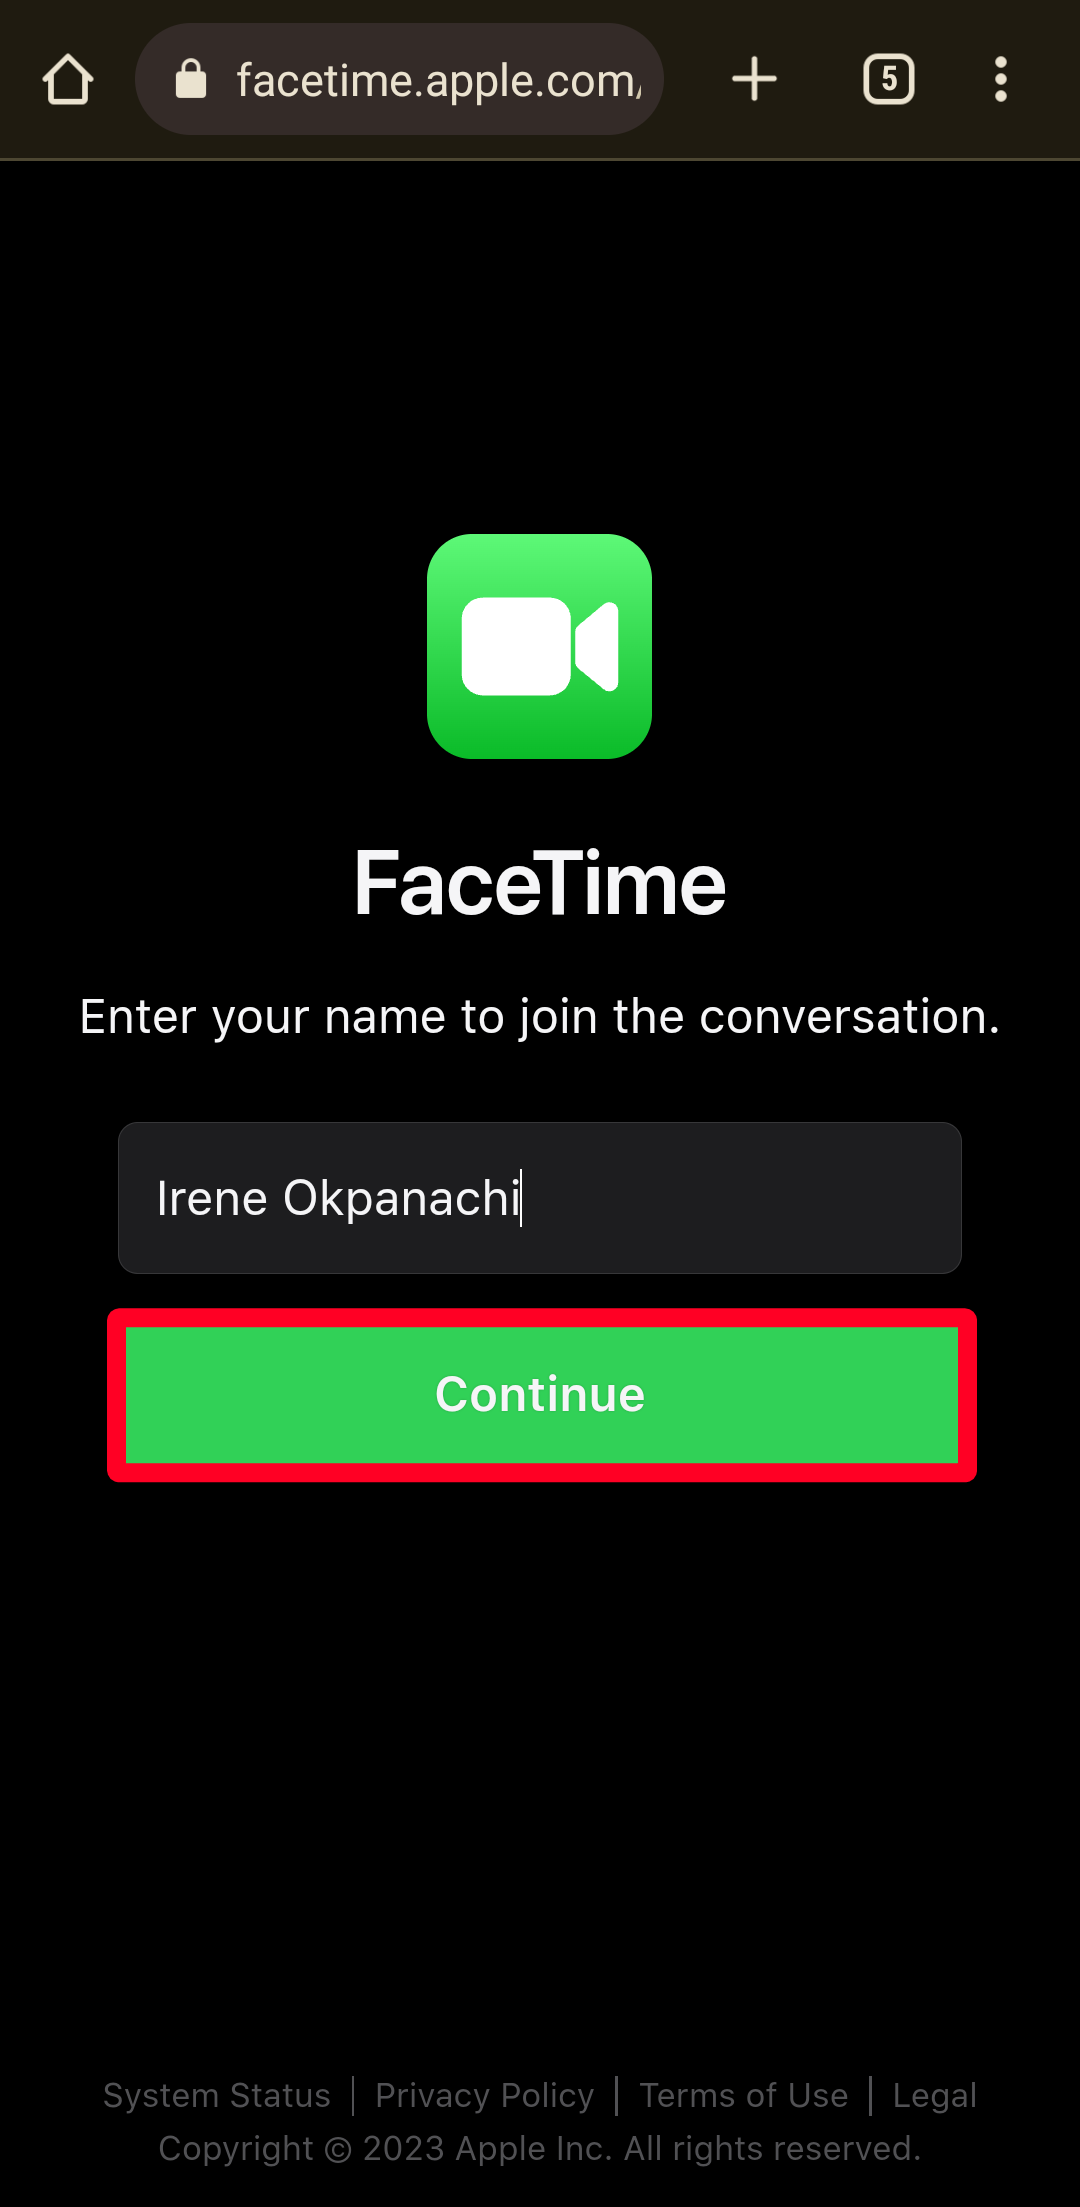 Digite seu nome na caixa de texto para usar o FaceTime no Android